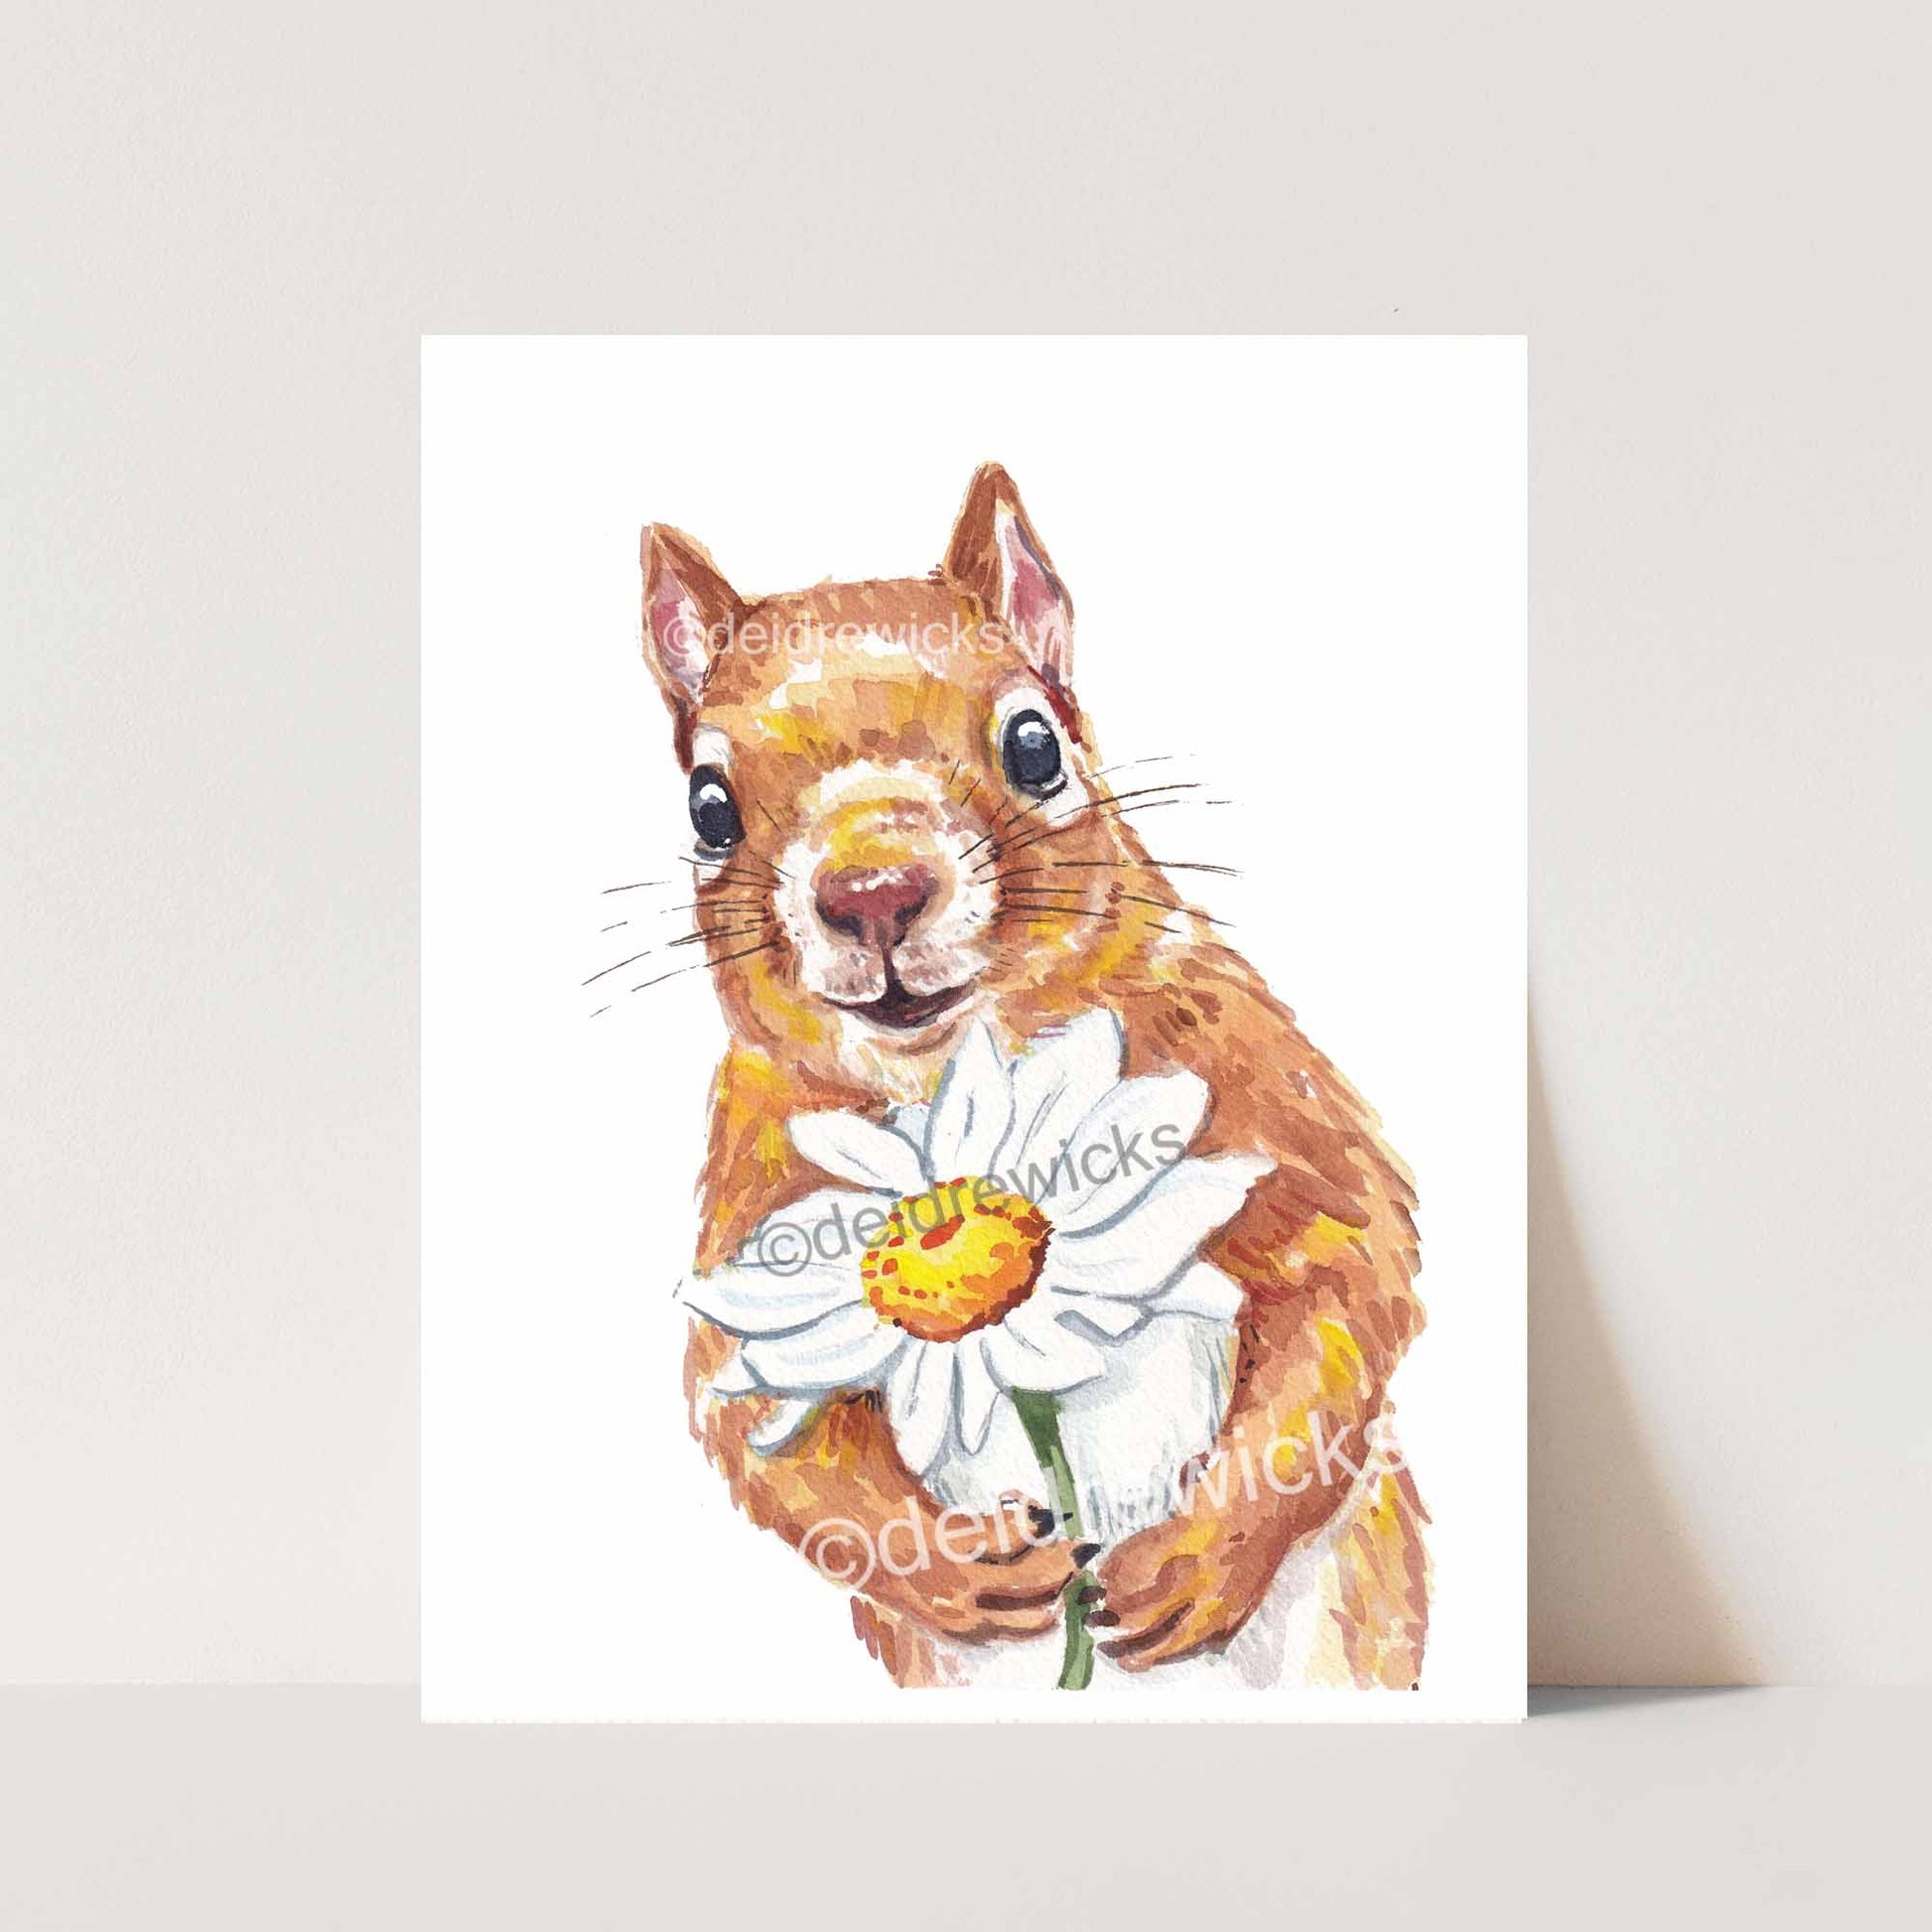 Fine art watercolour print of a love-struck squirrel holding a daisy flower